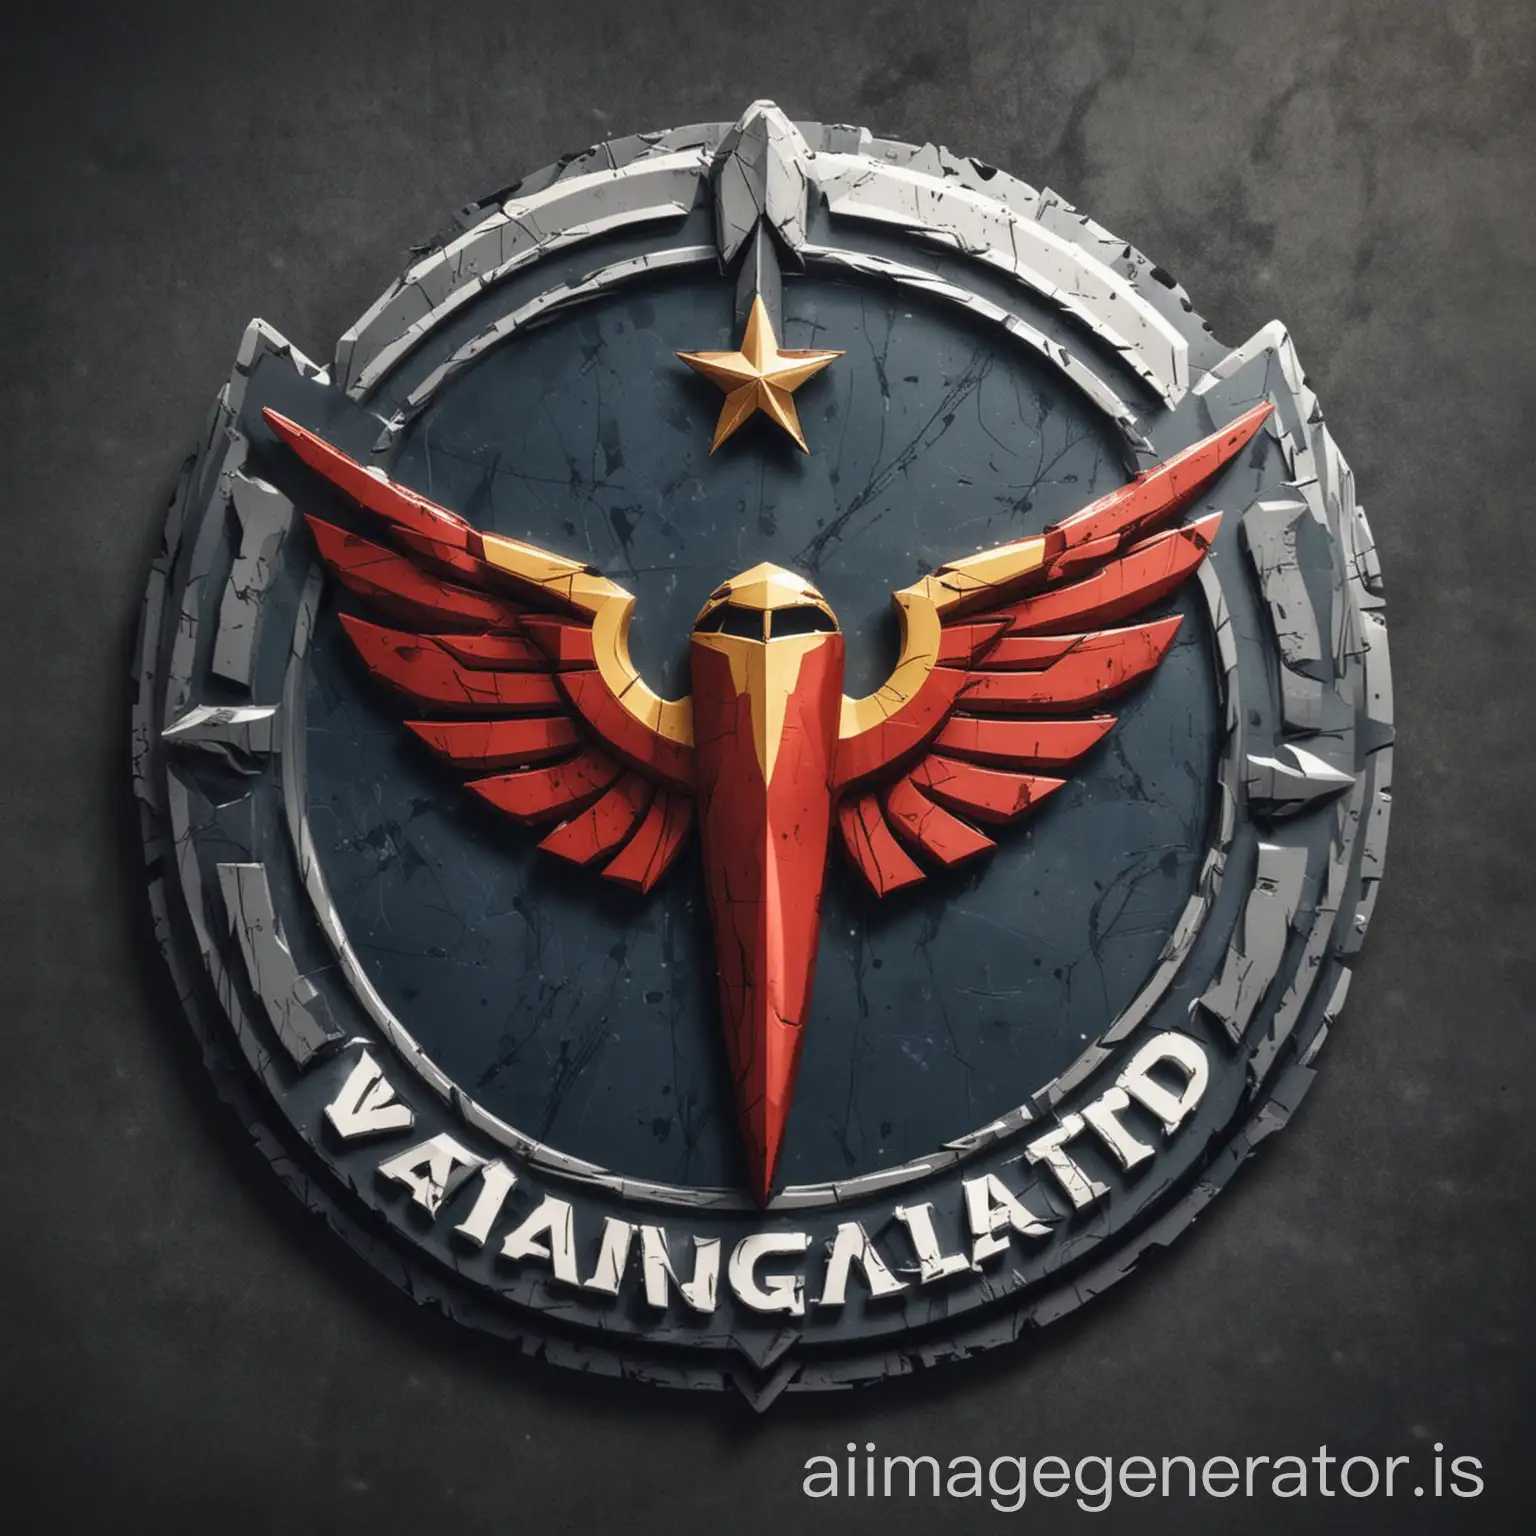 Vanguard-Team-Logo-for-Civil-Aviation-Innovation